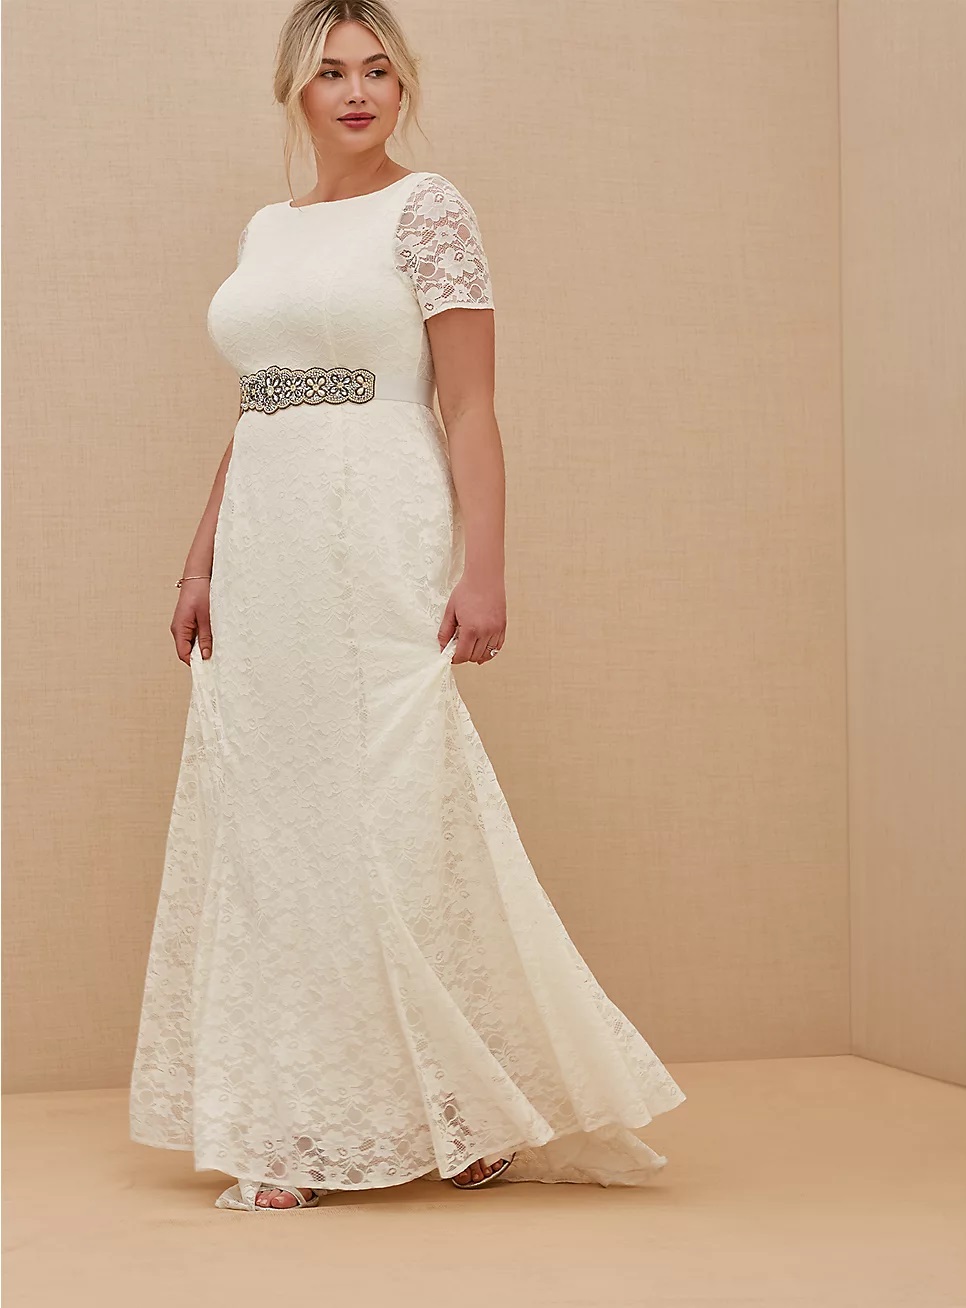 torrid wedding dress plus size in white lace, short sleeve